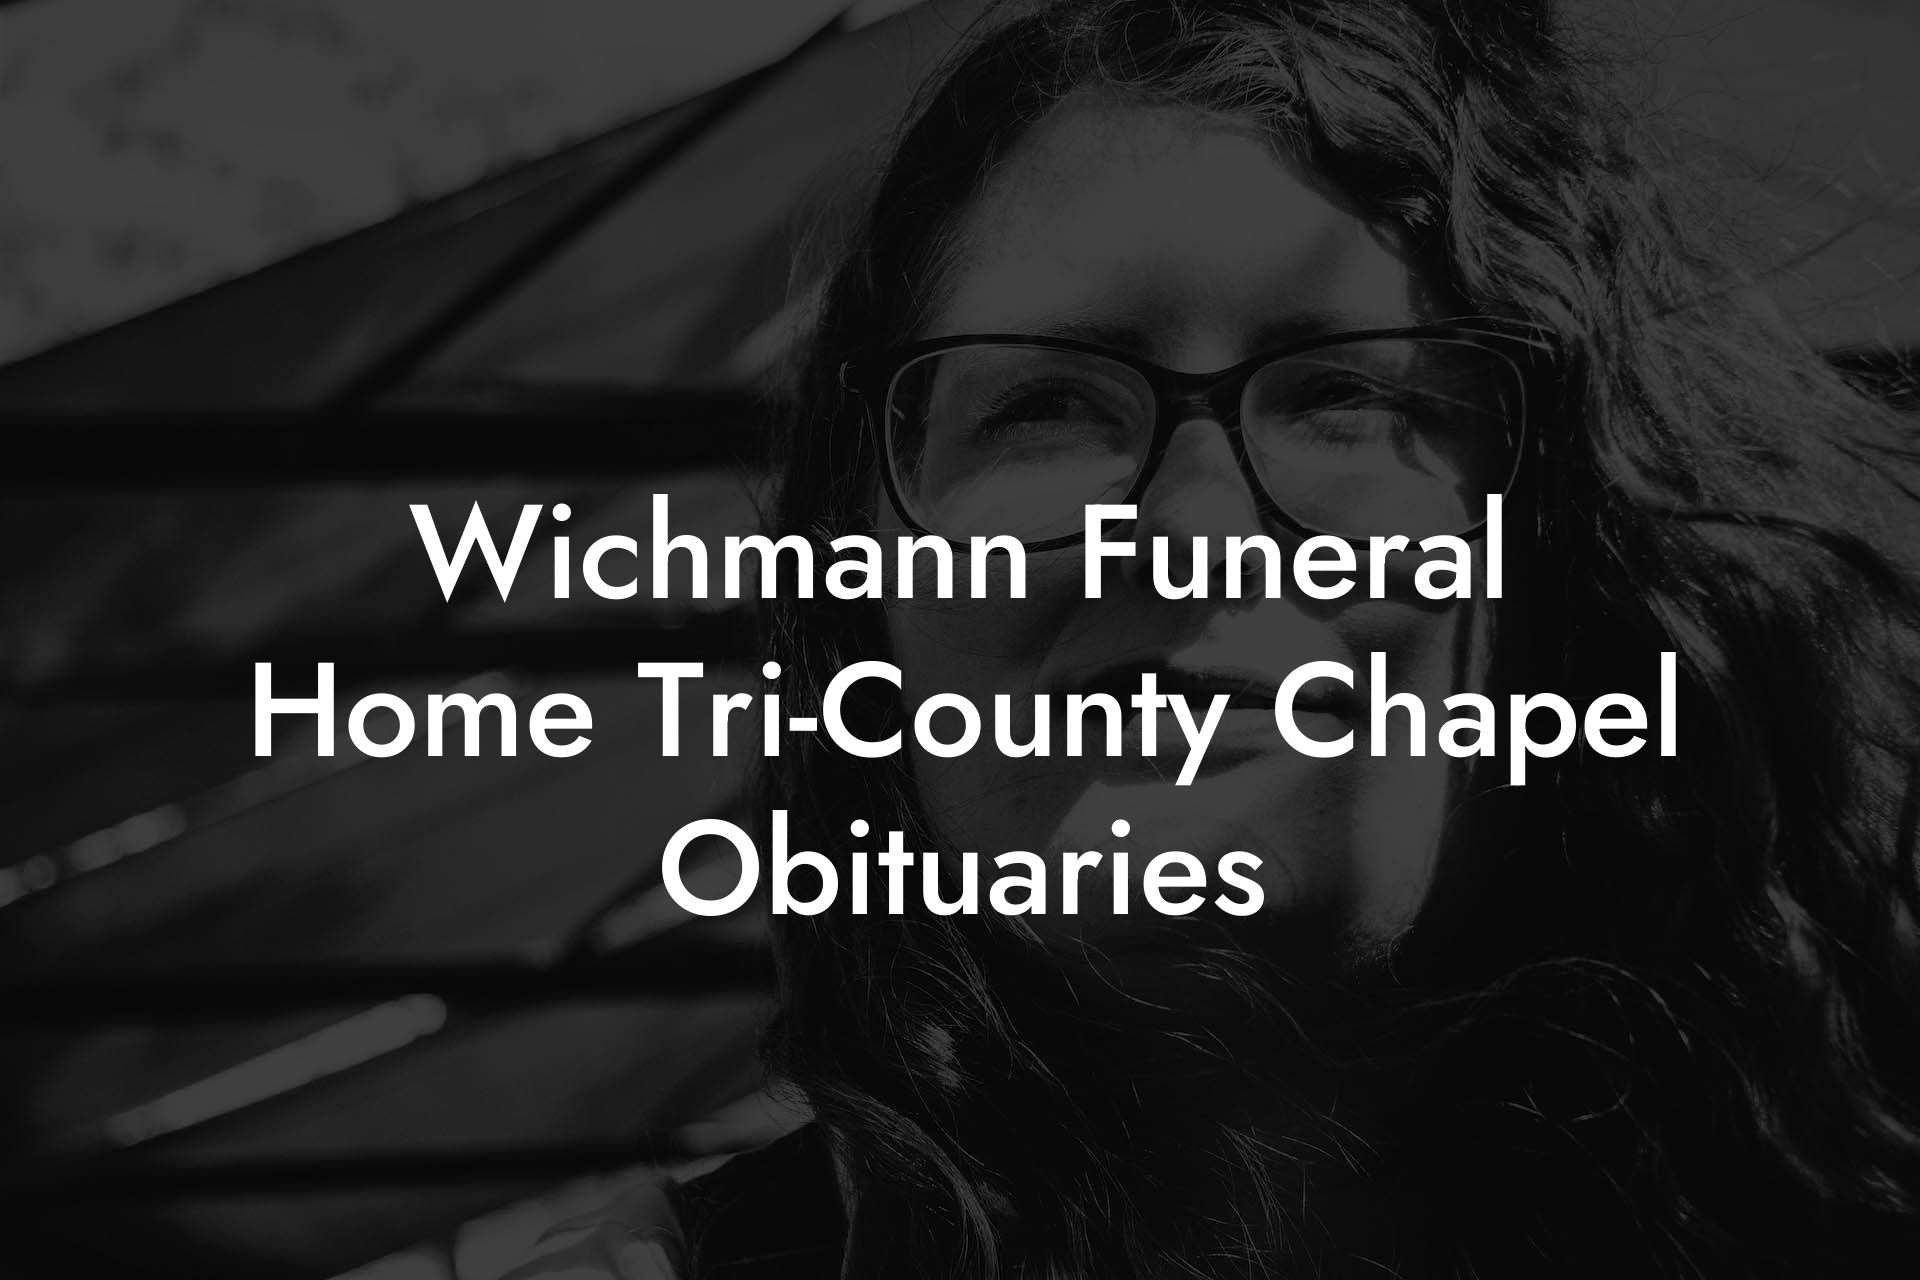 Wichmann Funeral Home Tri-County Chapel Obituaries